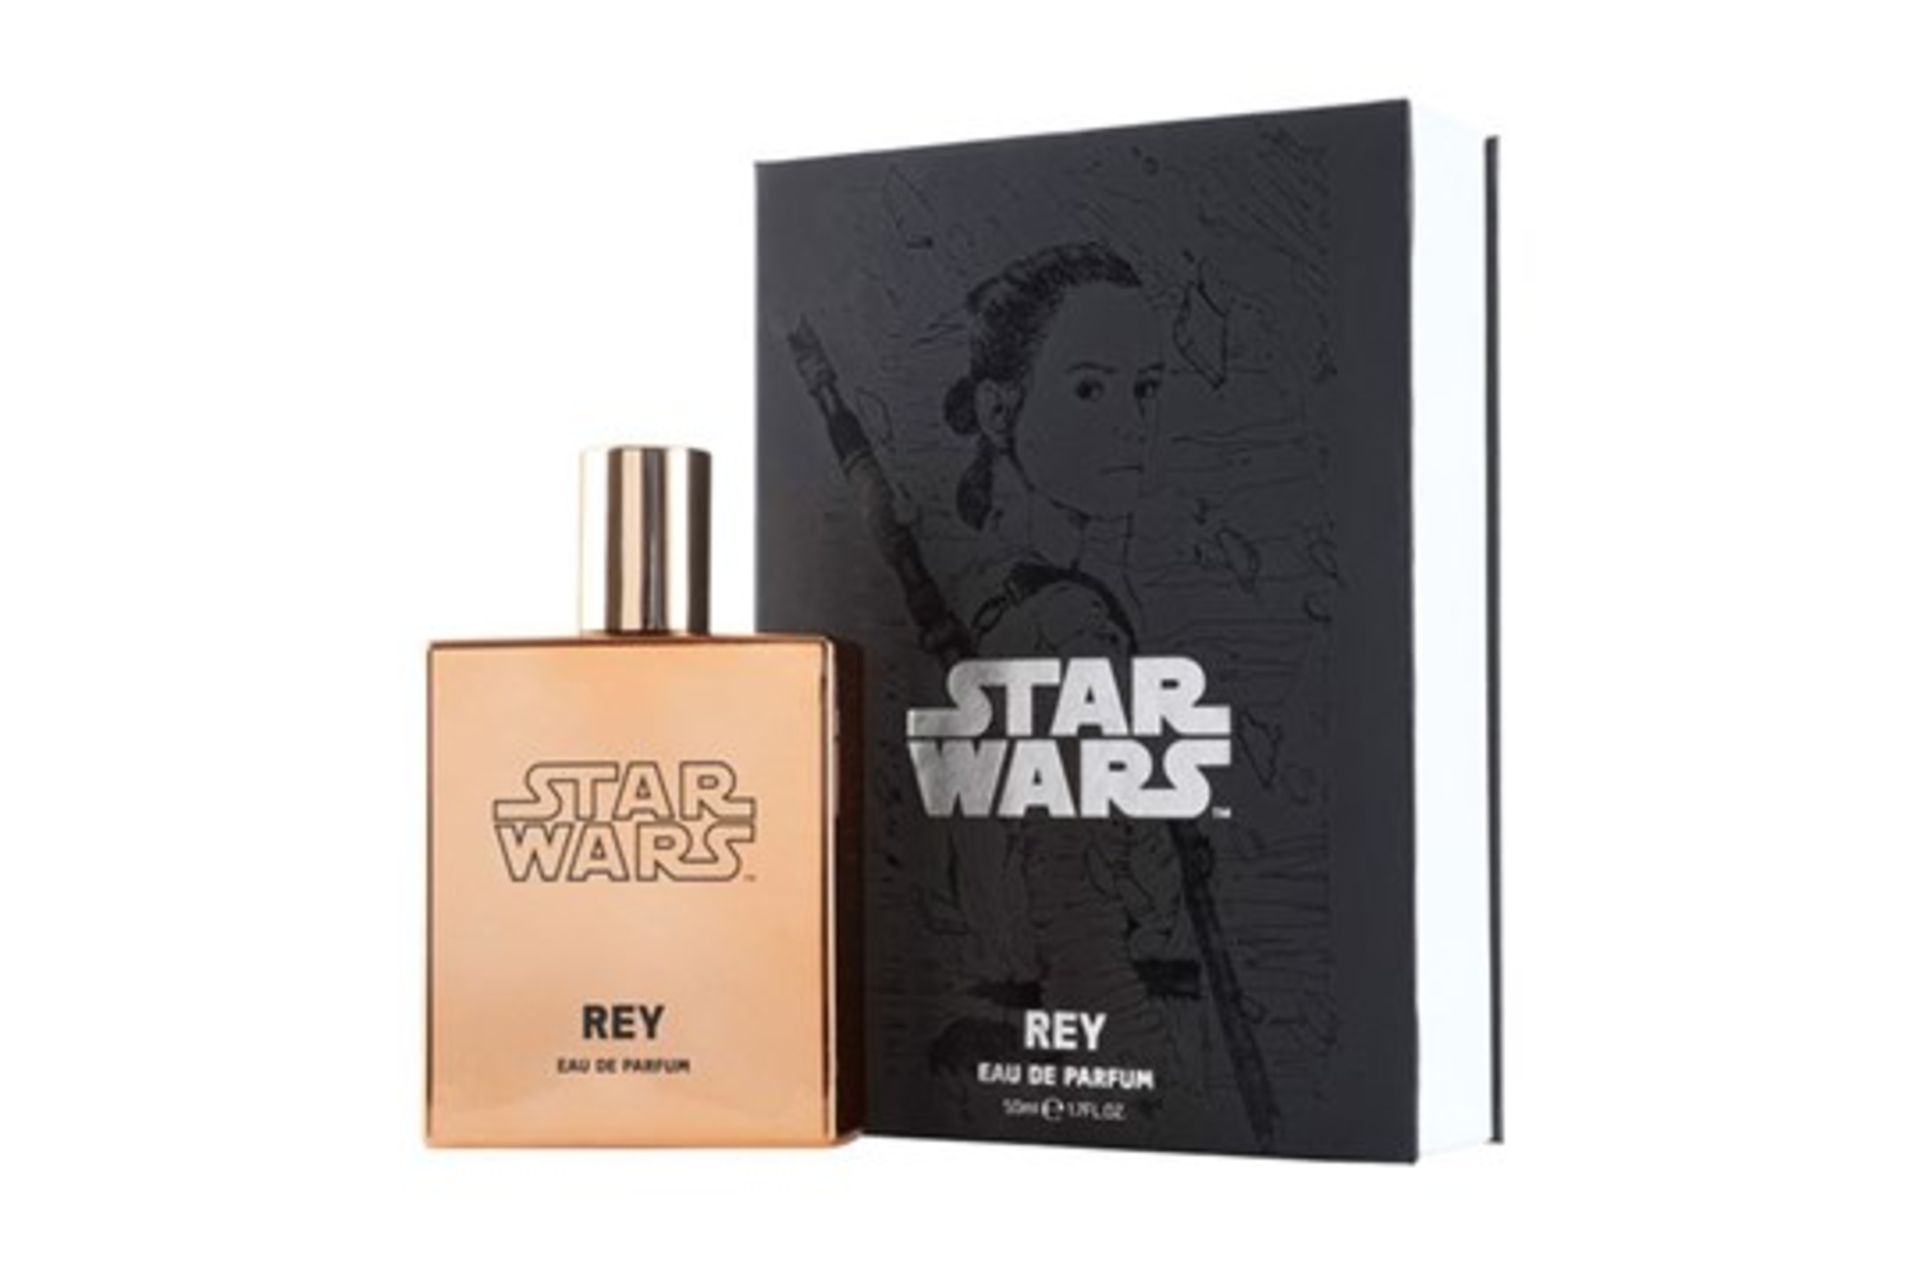 20x Brand new Star Wars Limited edition Eu De Parfum Original.